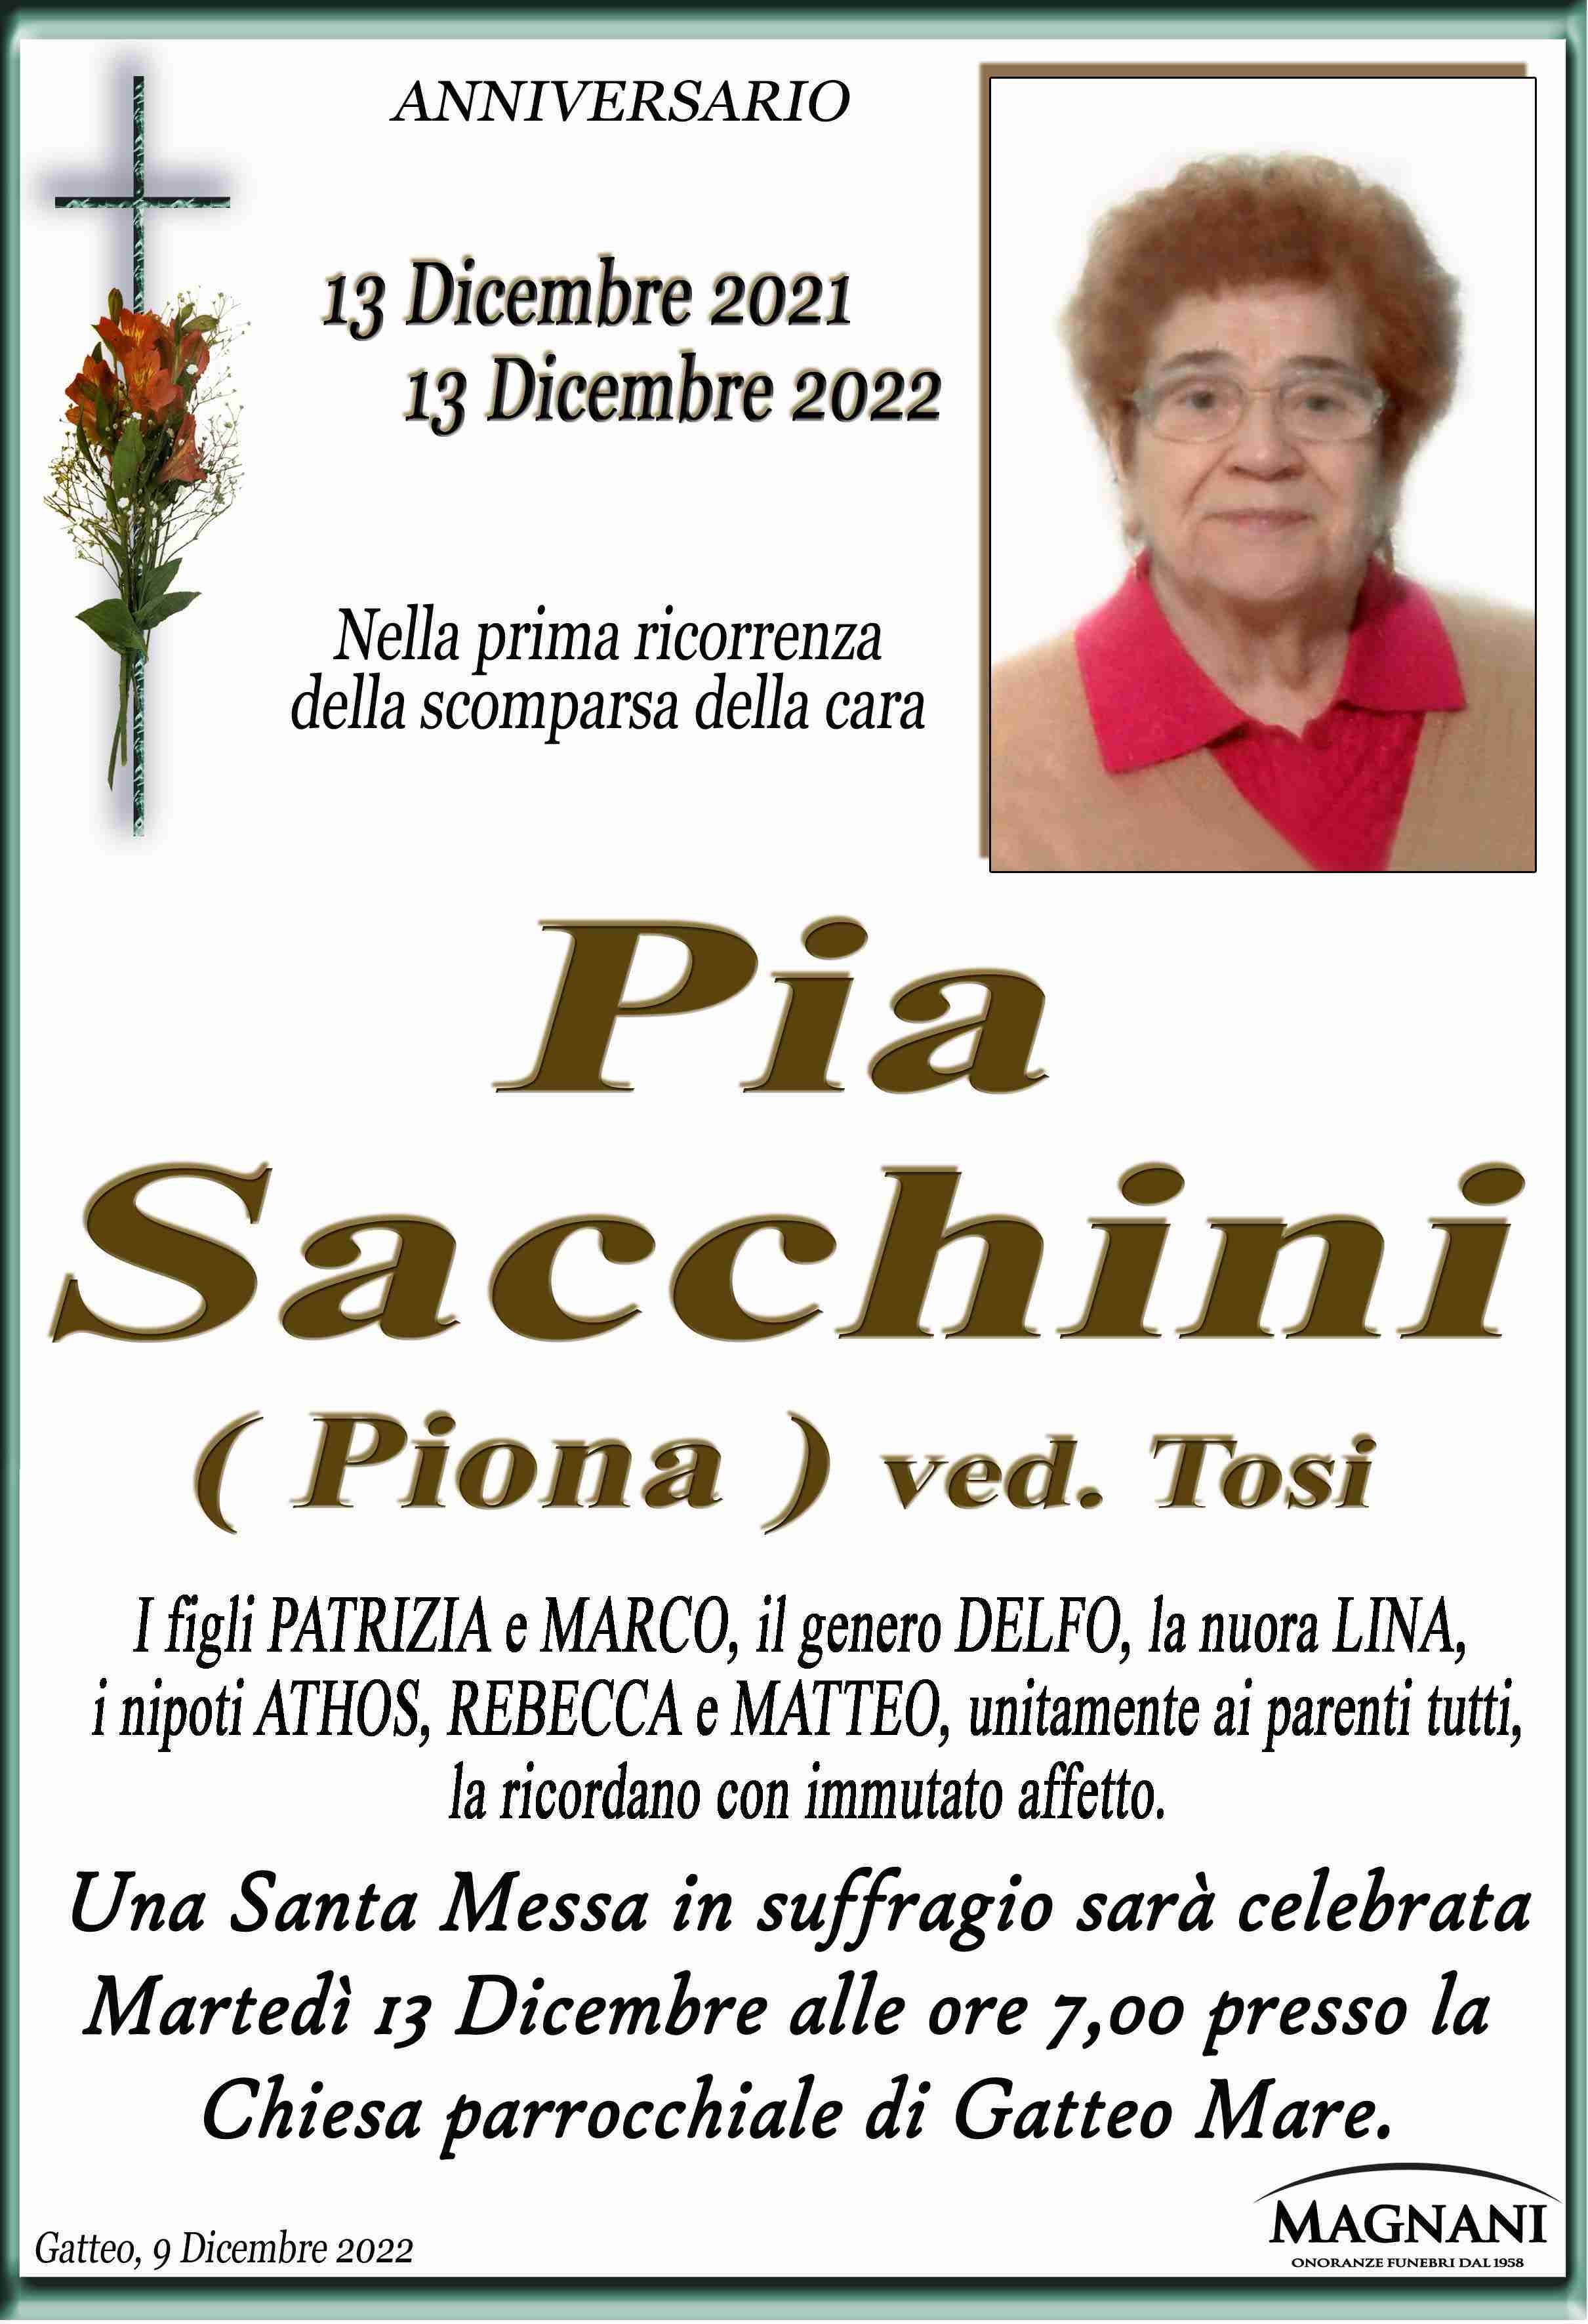 Pia Sacchini